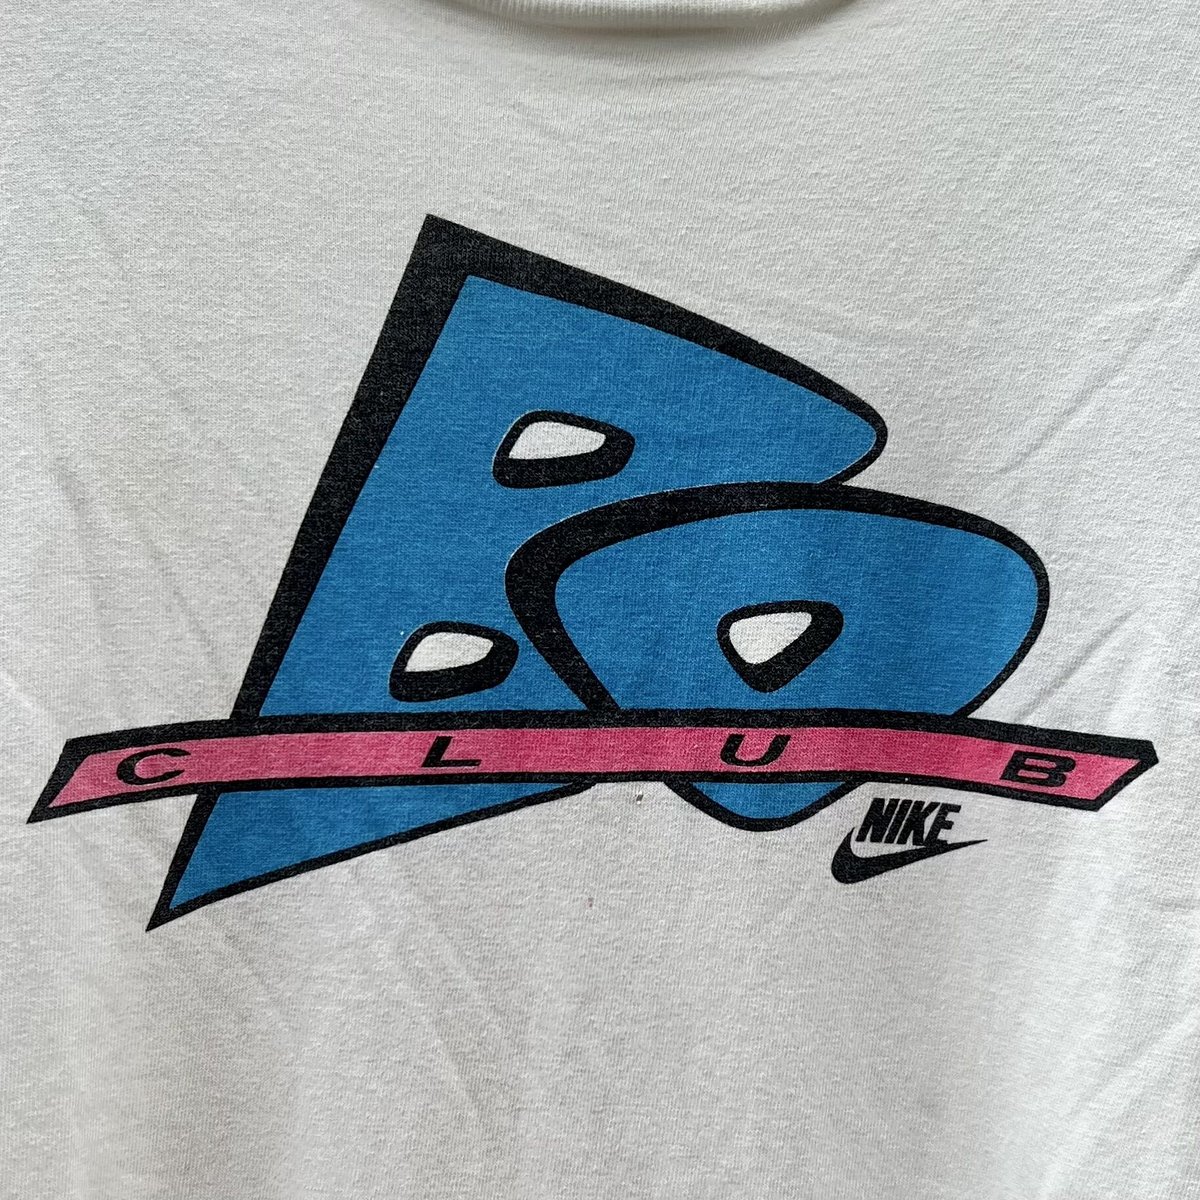 NIKE/ナイキ BO CLUB Tシャツ 90年前後 Made in USA (USED)